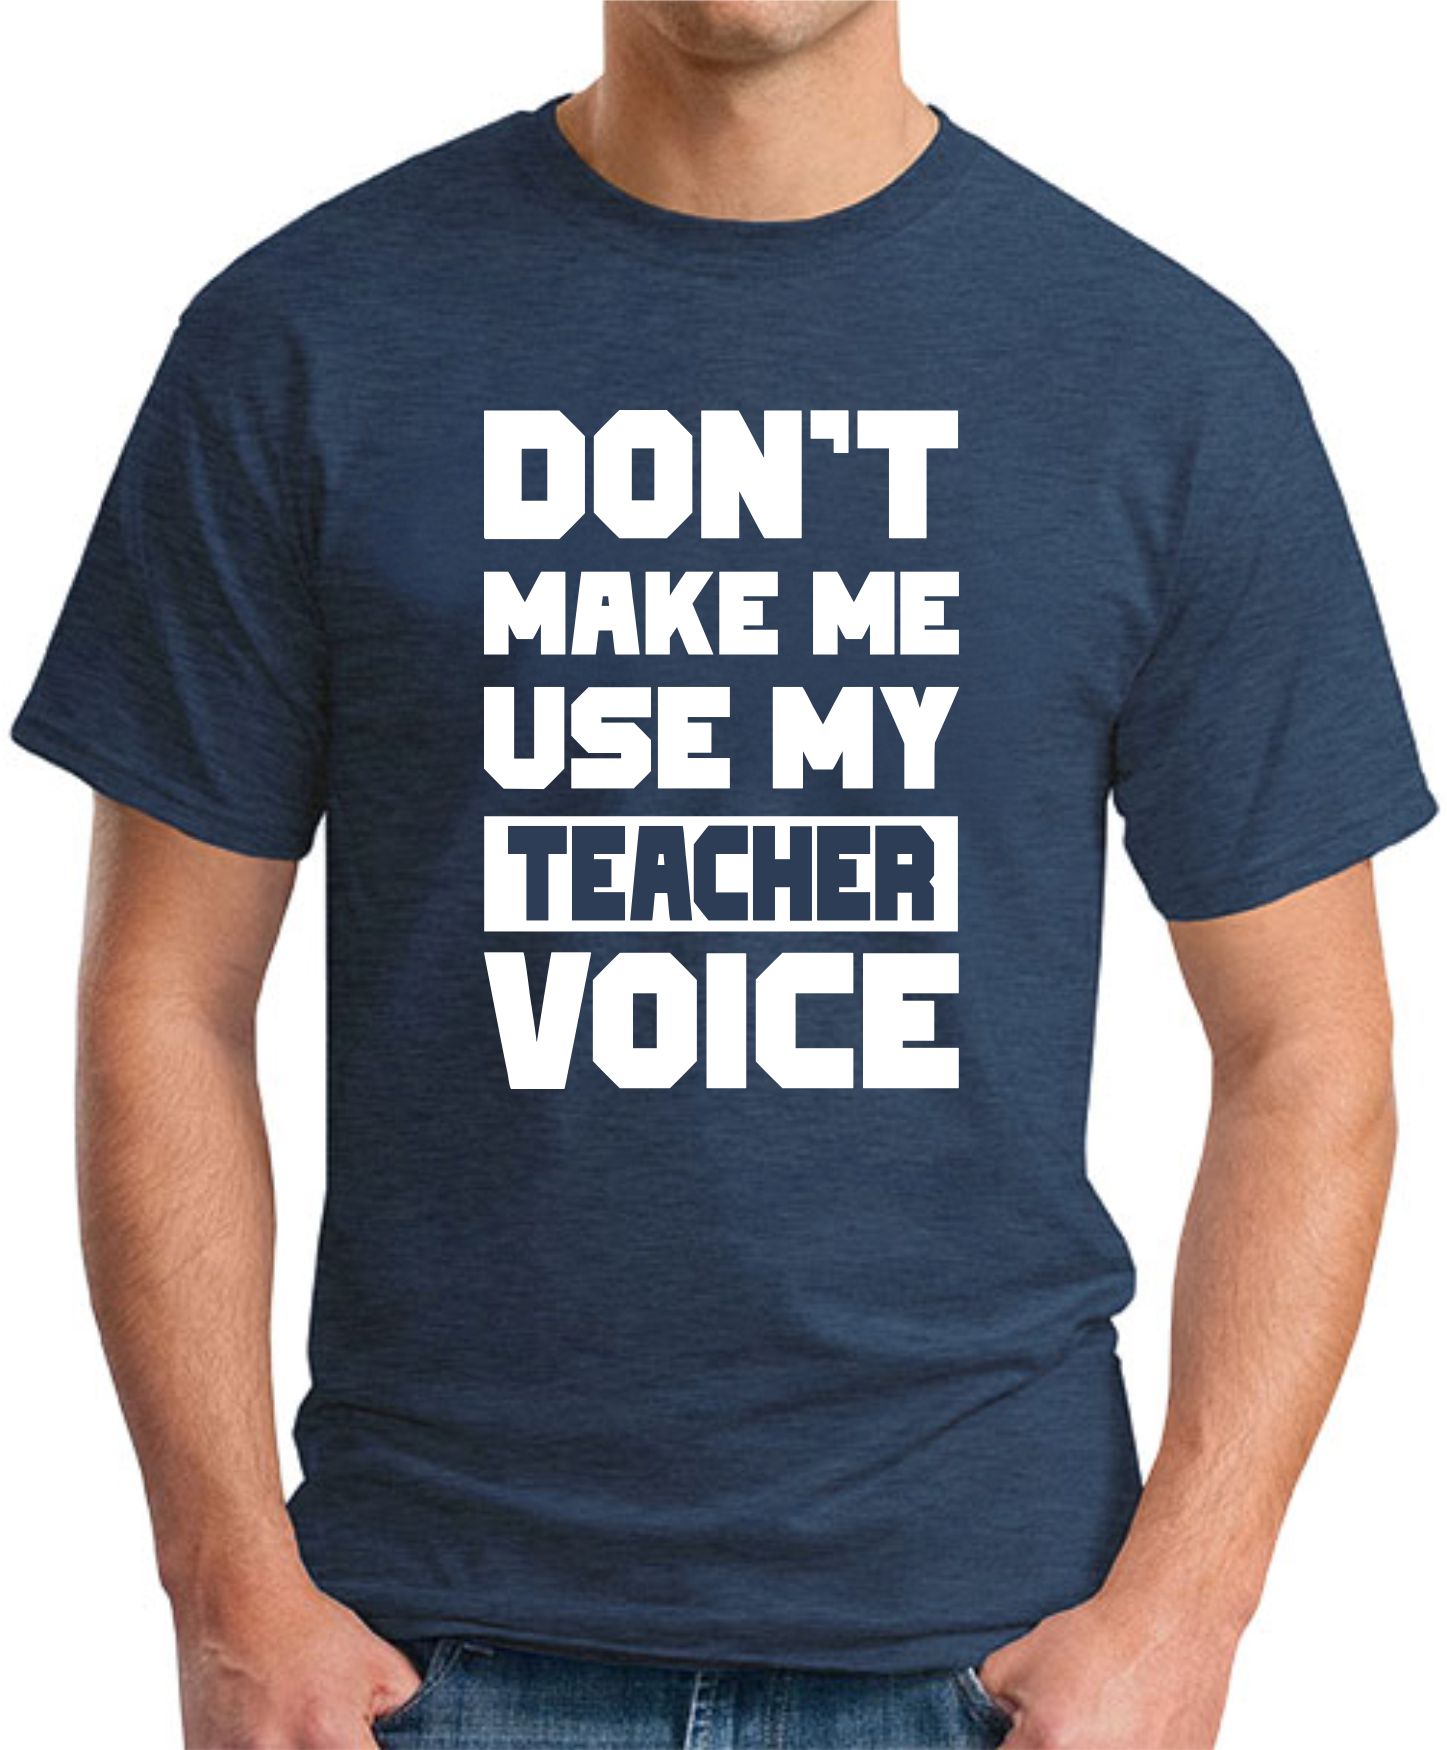 DON'T MAKE ME USE MY TEACHER VOICE navy